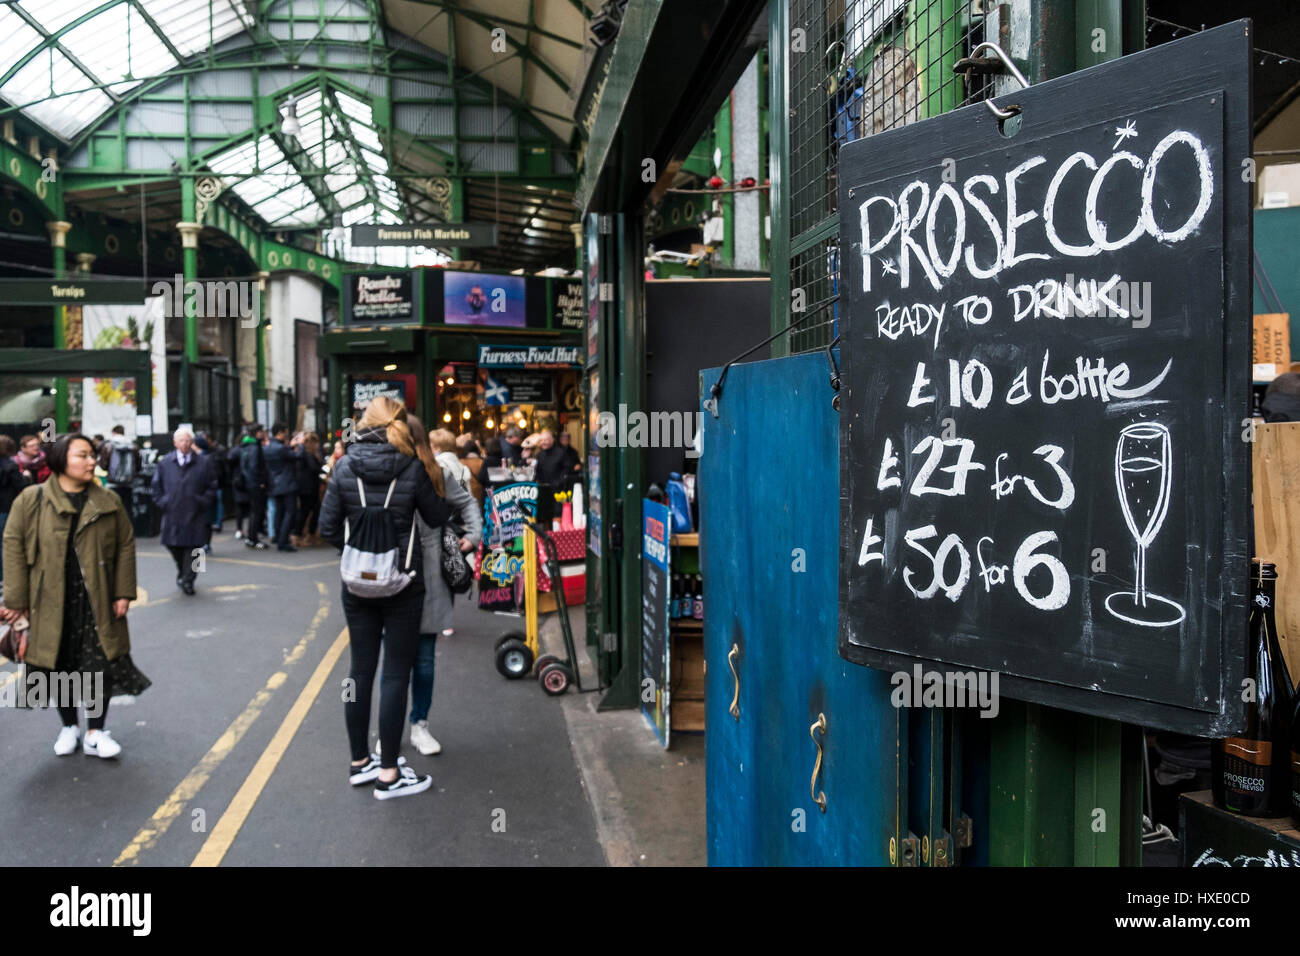 Borough Market Interior Sign Prosecco Customers Shoppers Tourists London Tourism Stock Photo